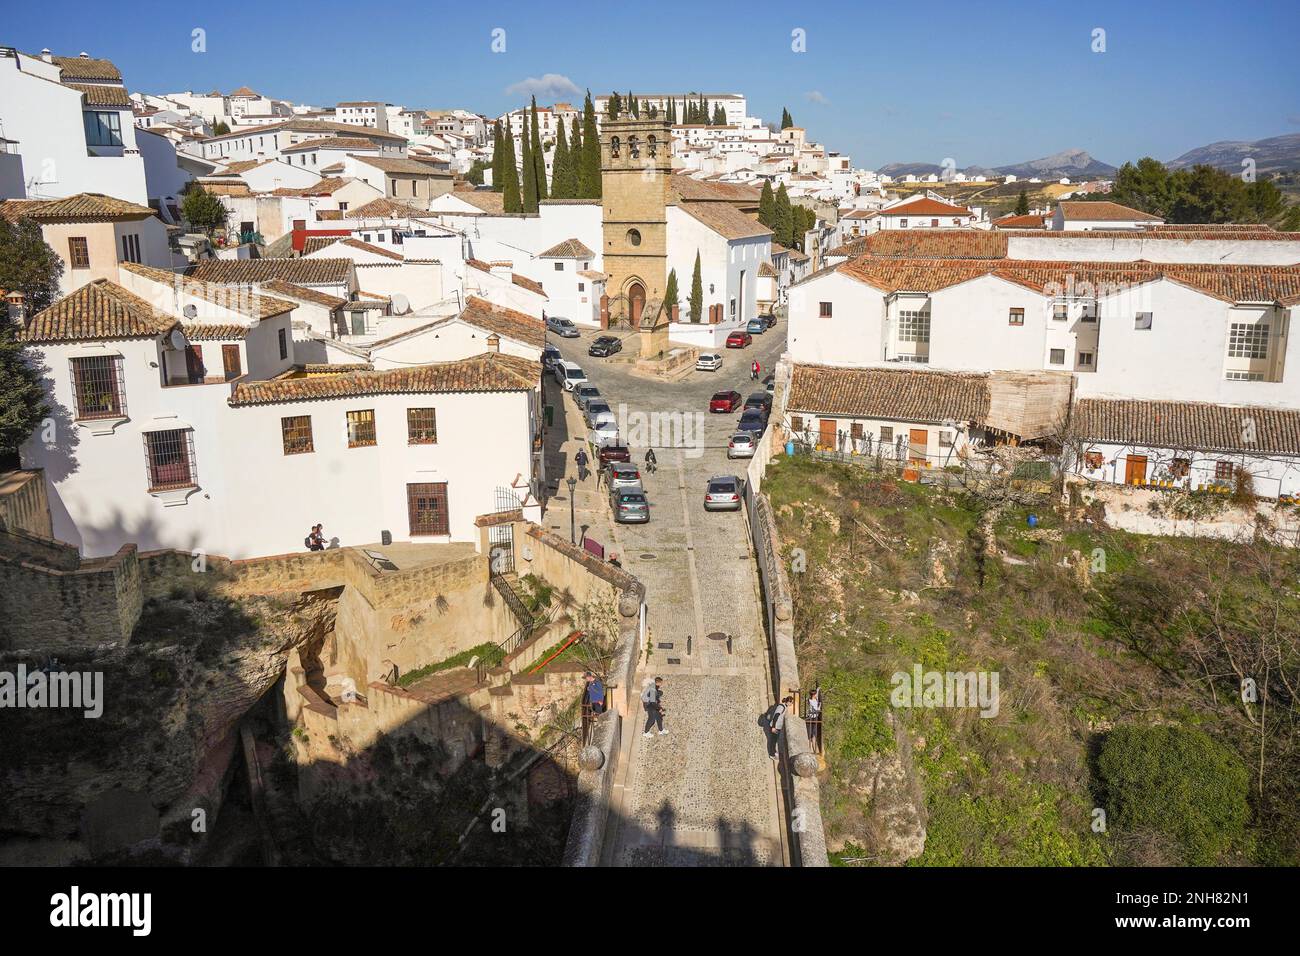 Ronda Spain, Puente Viejo, or Old Bridge in Barrio de Padre Jesús, Ronda, Andalucia, Spain. Stock Photo